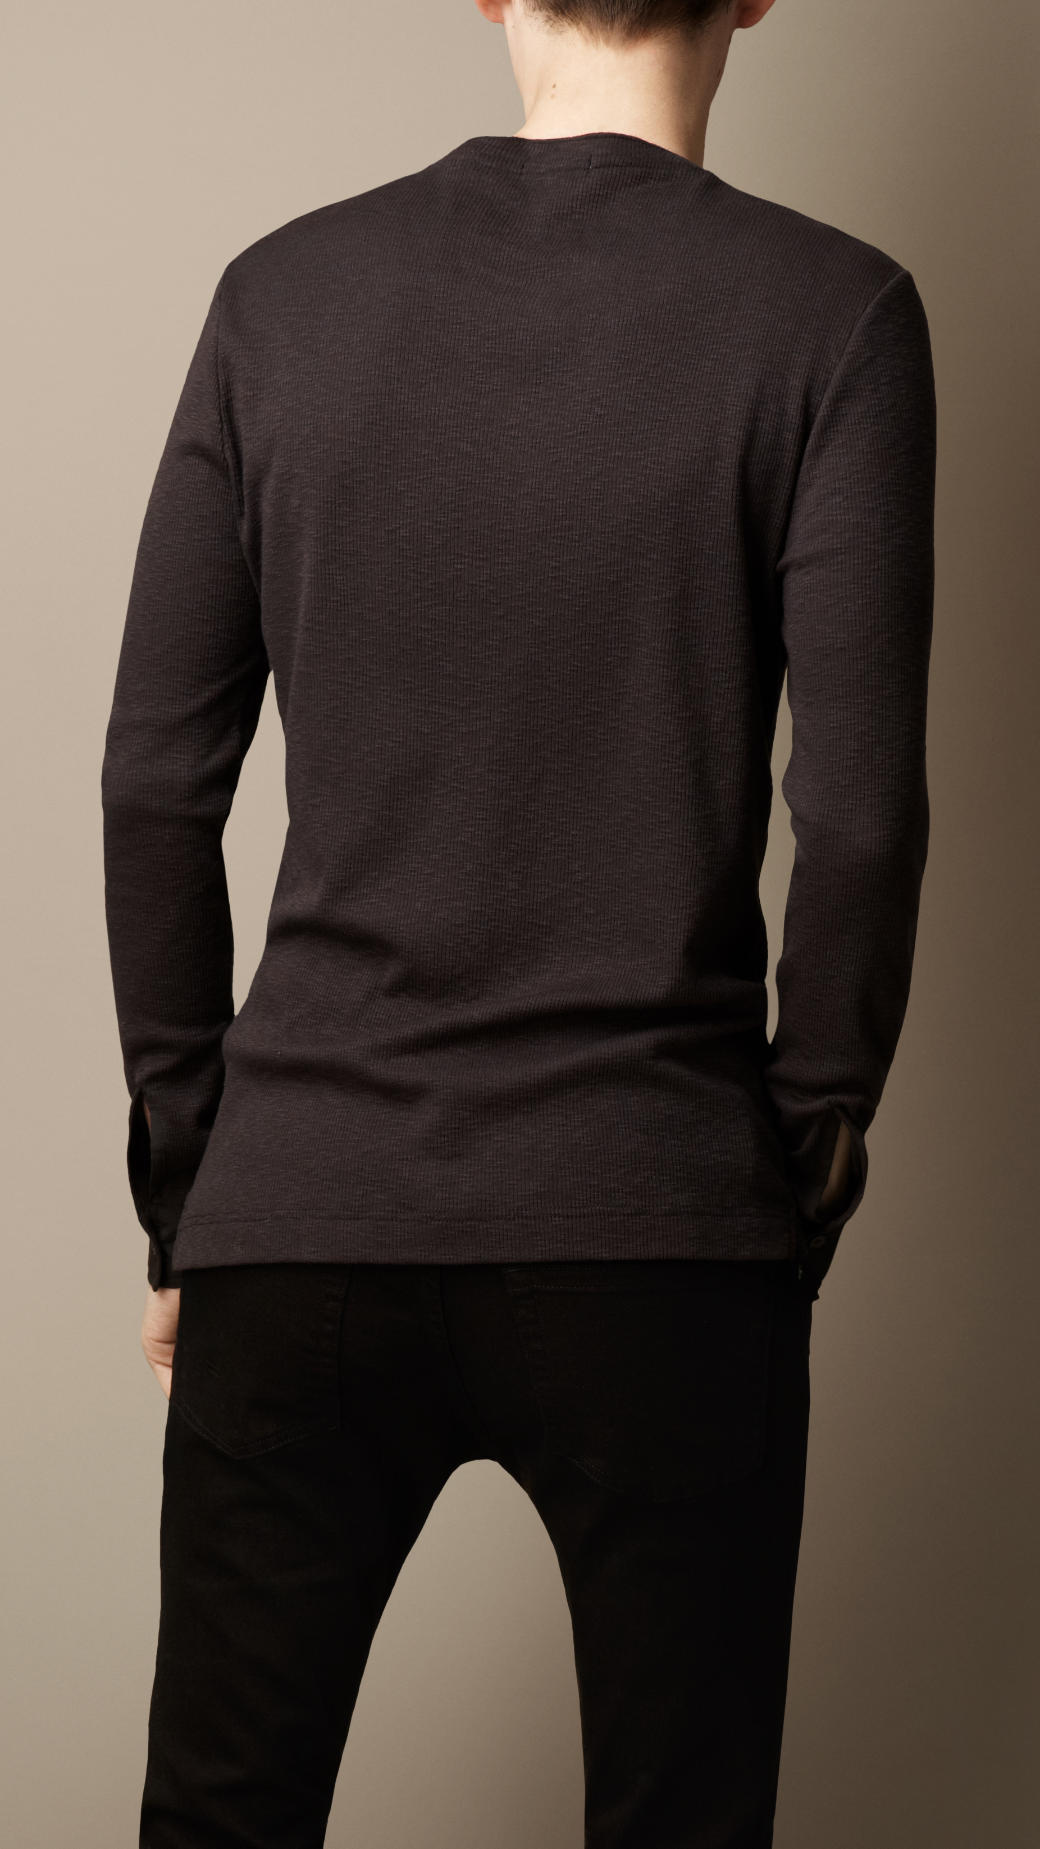 Lyst - Burberry Cotton Wool Blend Henley in Black for Men